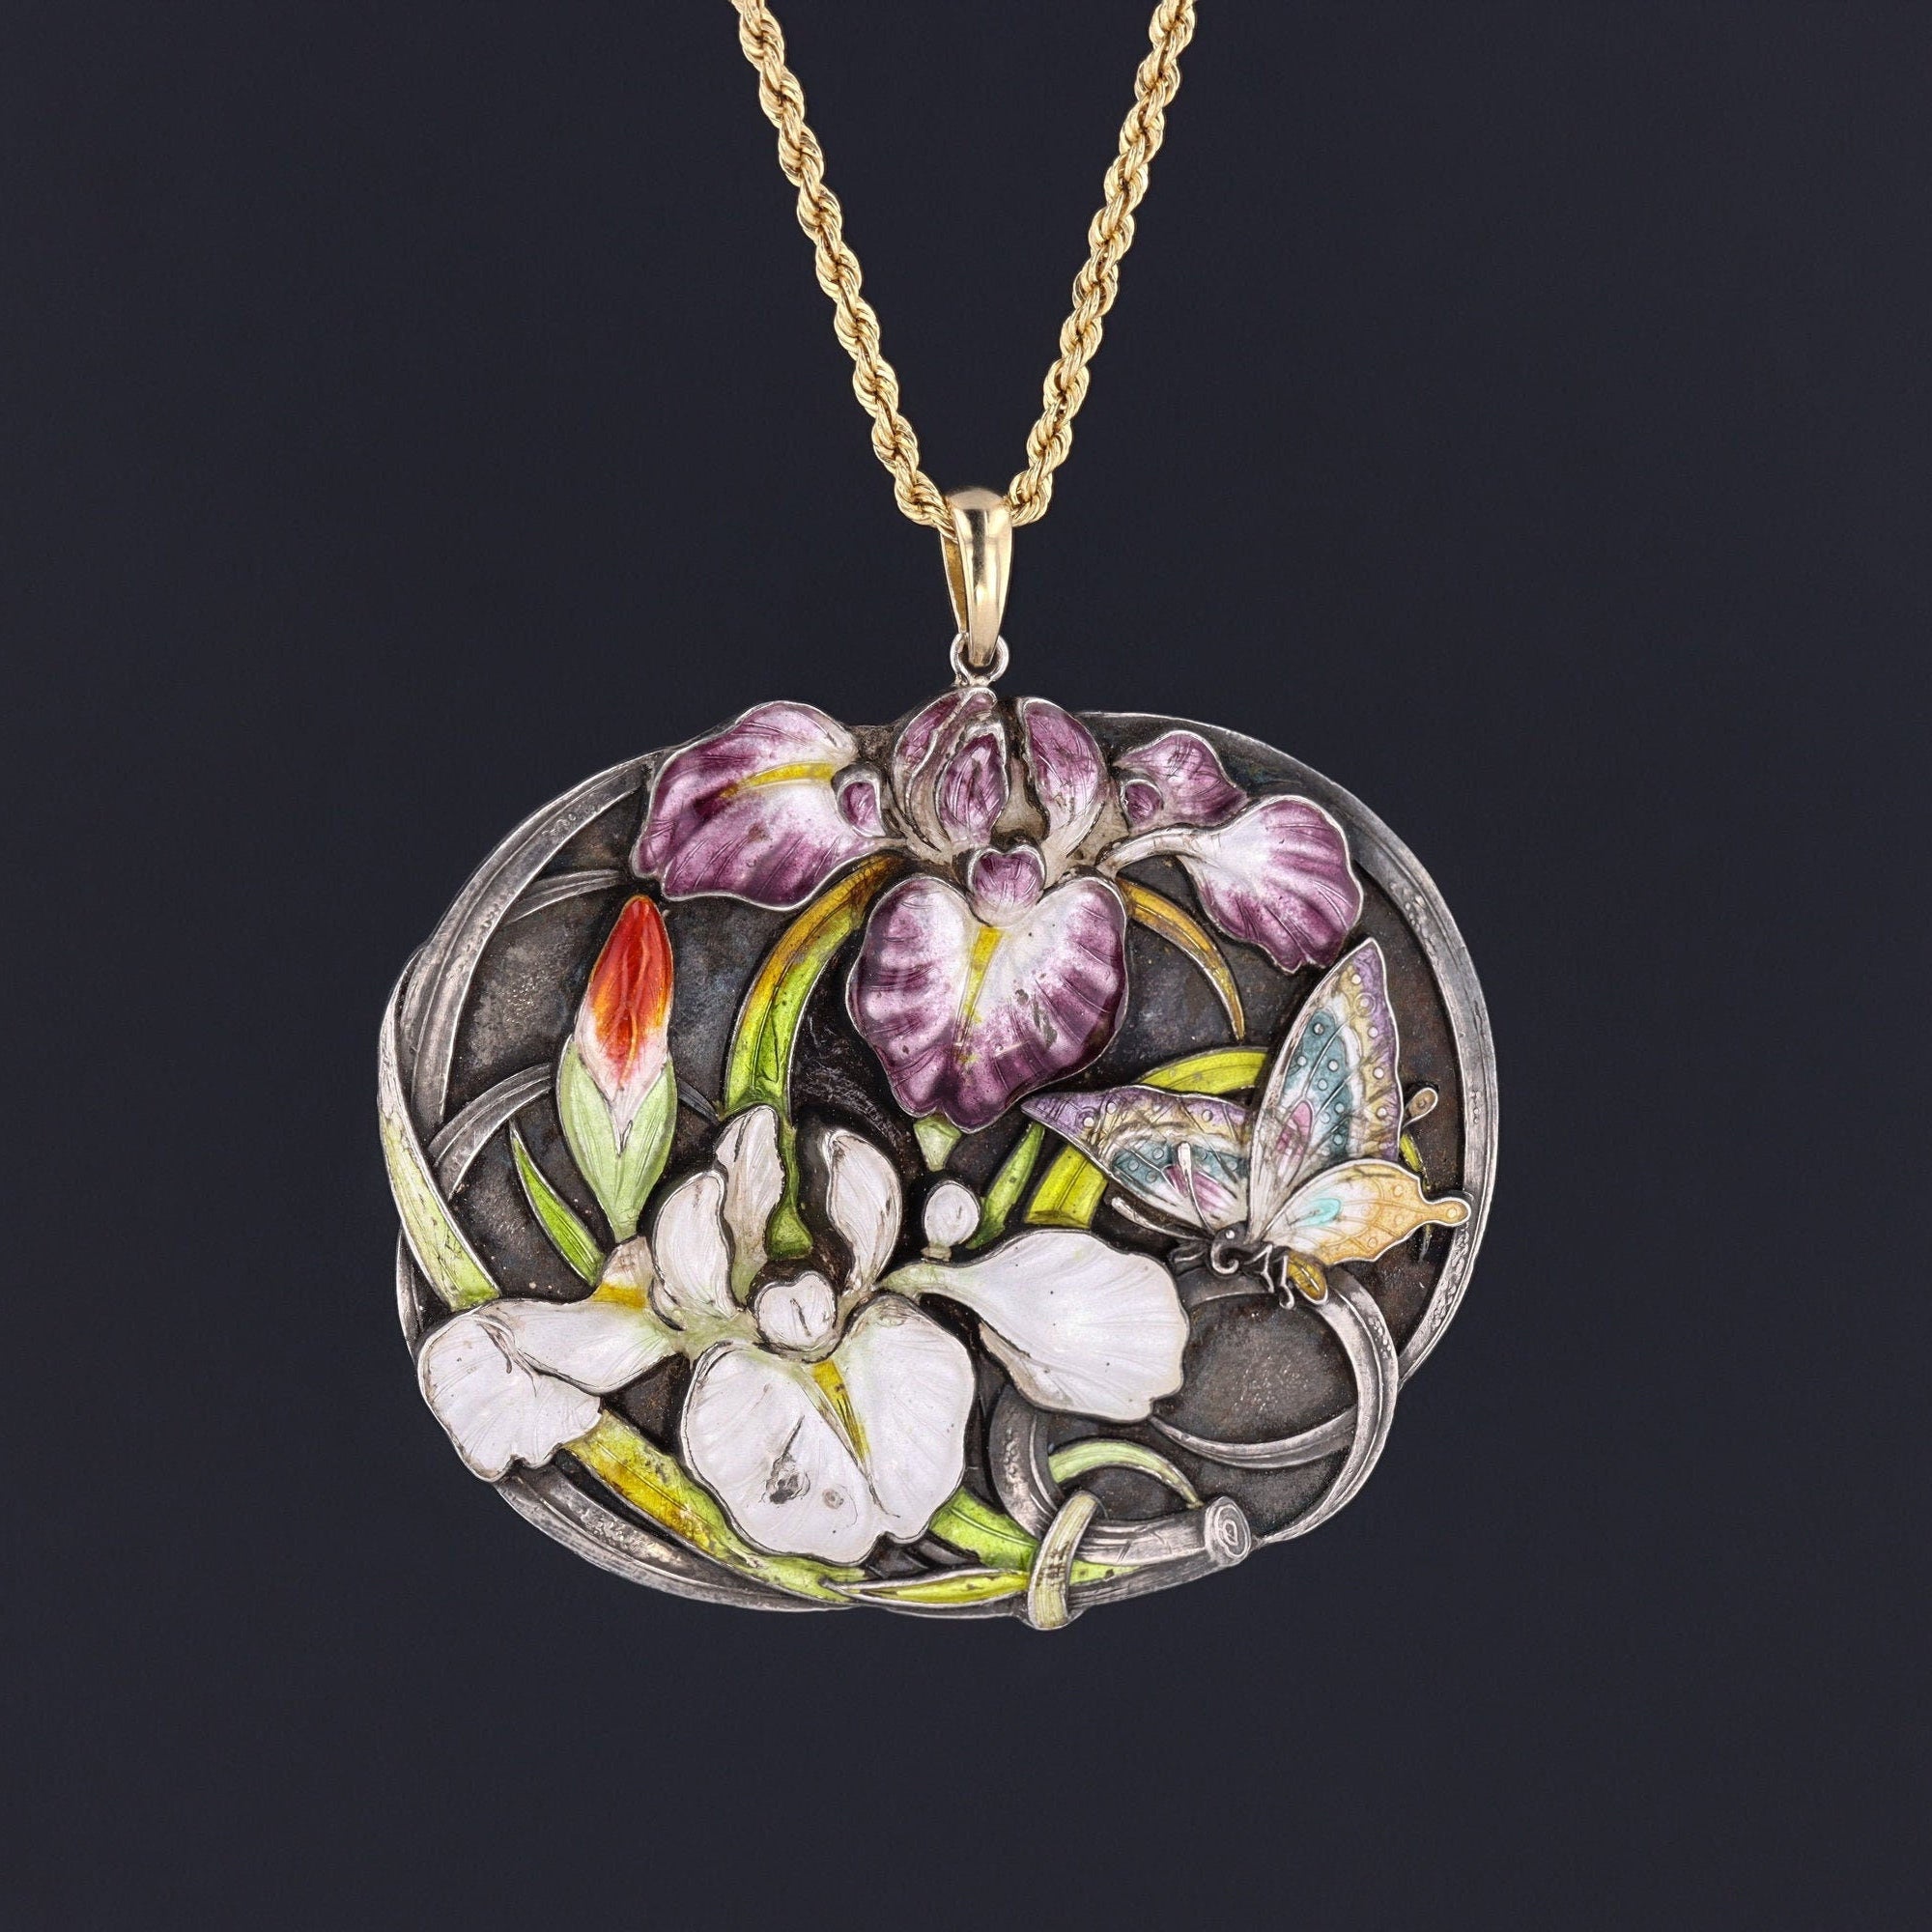 Japanese Enamel Pendant | Antique Silver & Enamel Iris Pendant with Butterfly on Optional 14k Chain 